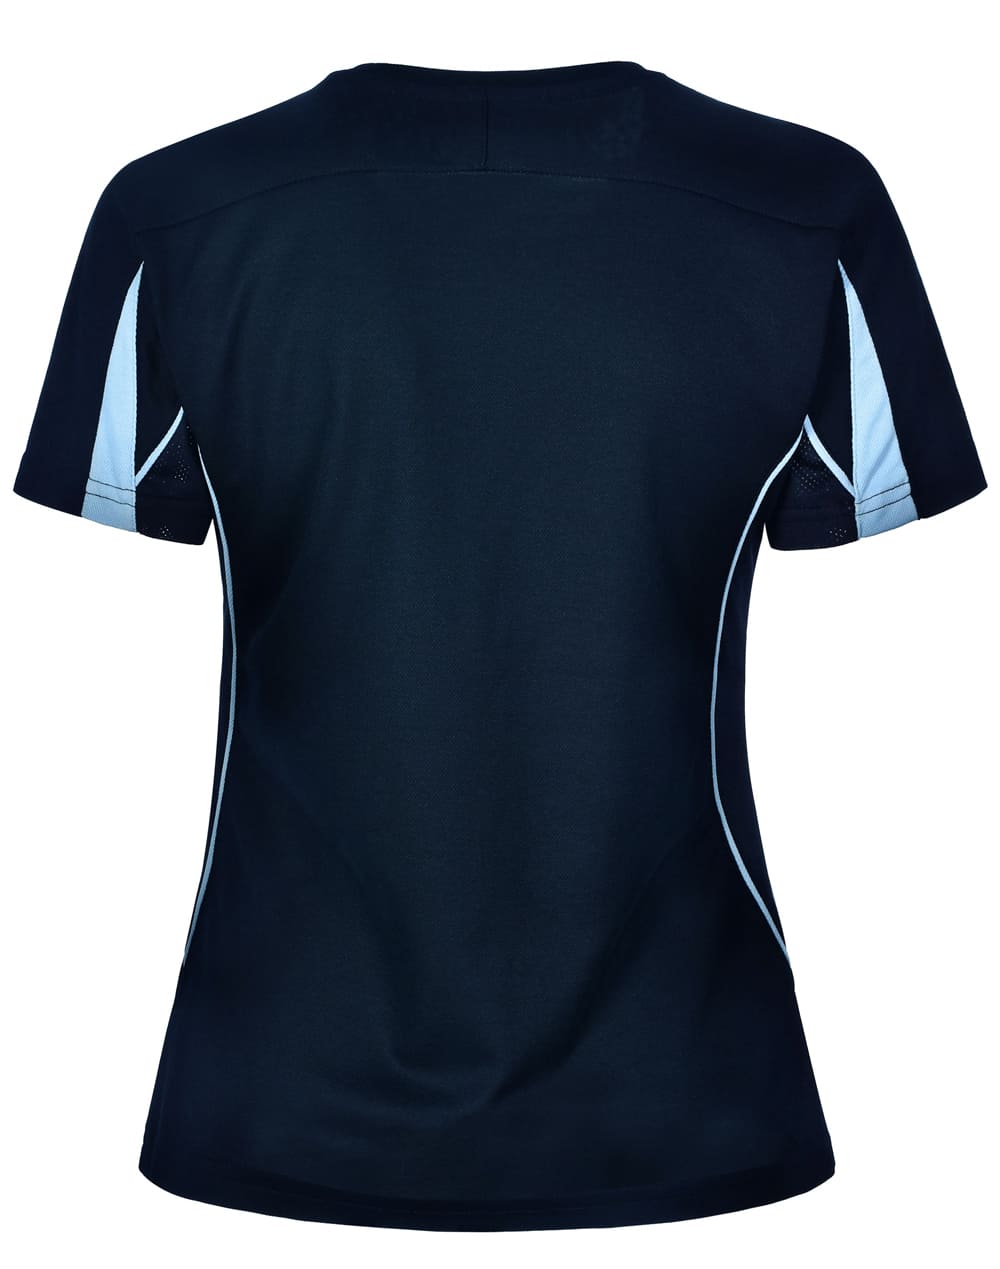 Custom Made (Black Aqua Blue) Legend Ladies Short Sleeve Tee Shirts Online in Perth